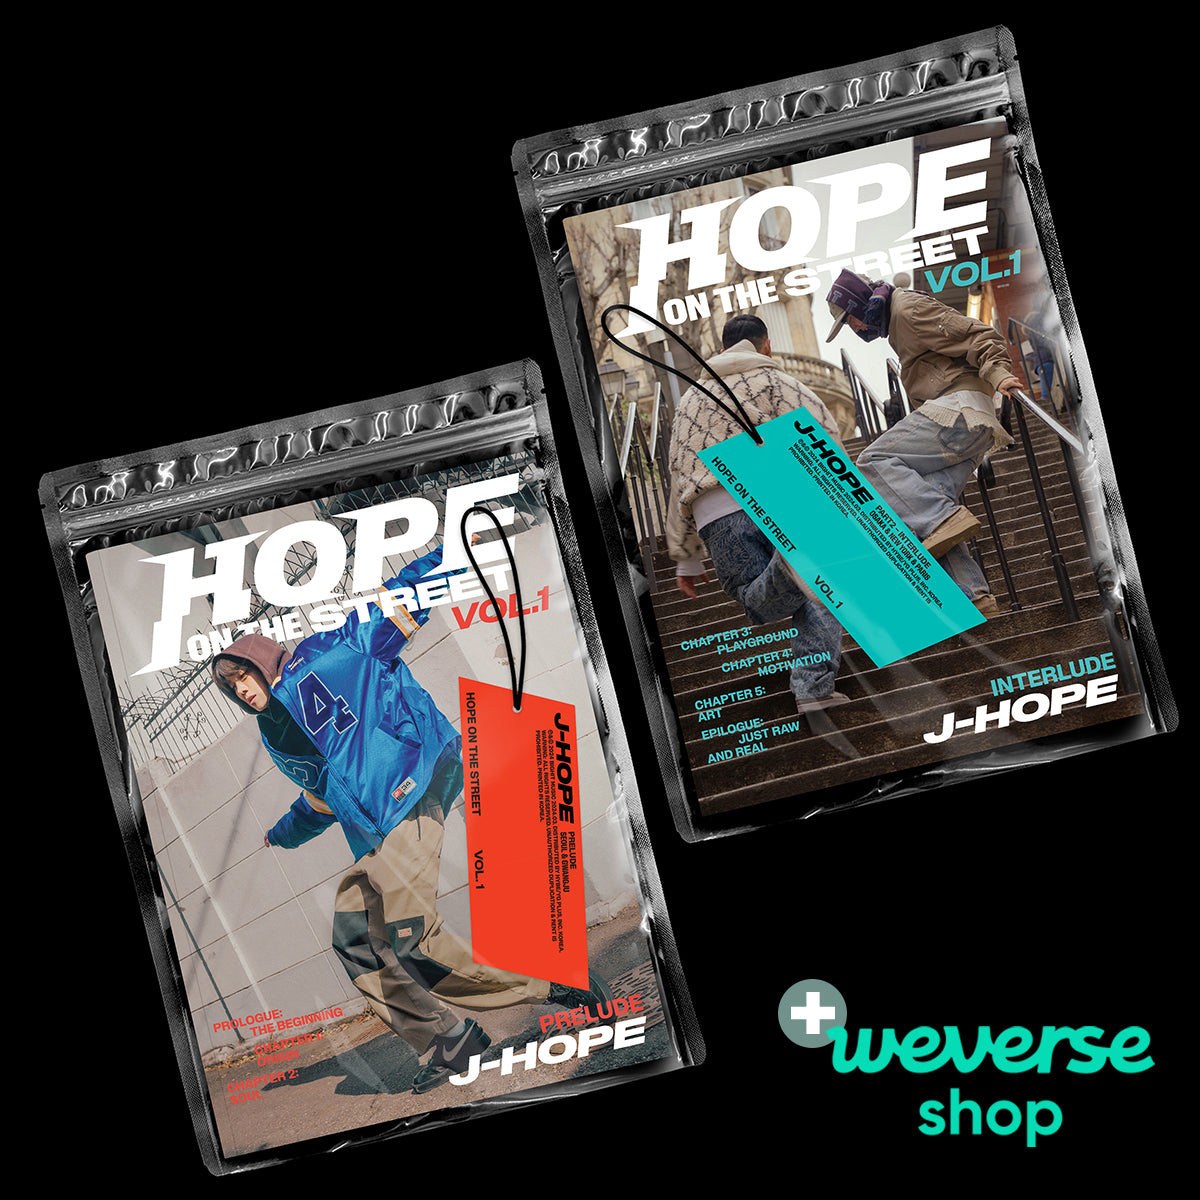 j-hope (BTS) - HOPE ON THE STREET VOL.1 + Weverse Shop P.O.B [PRE-ORDER]